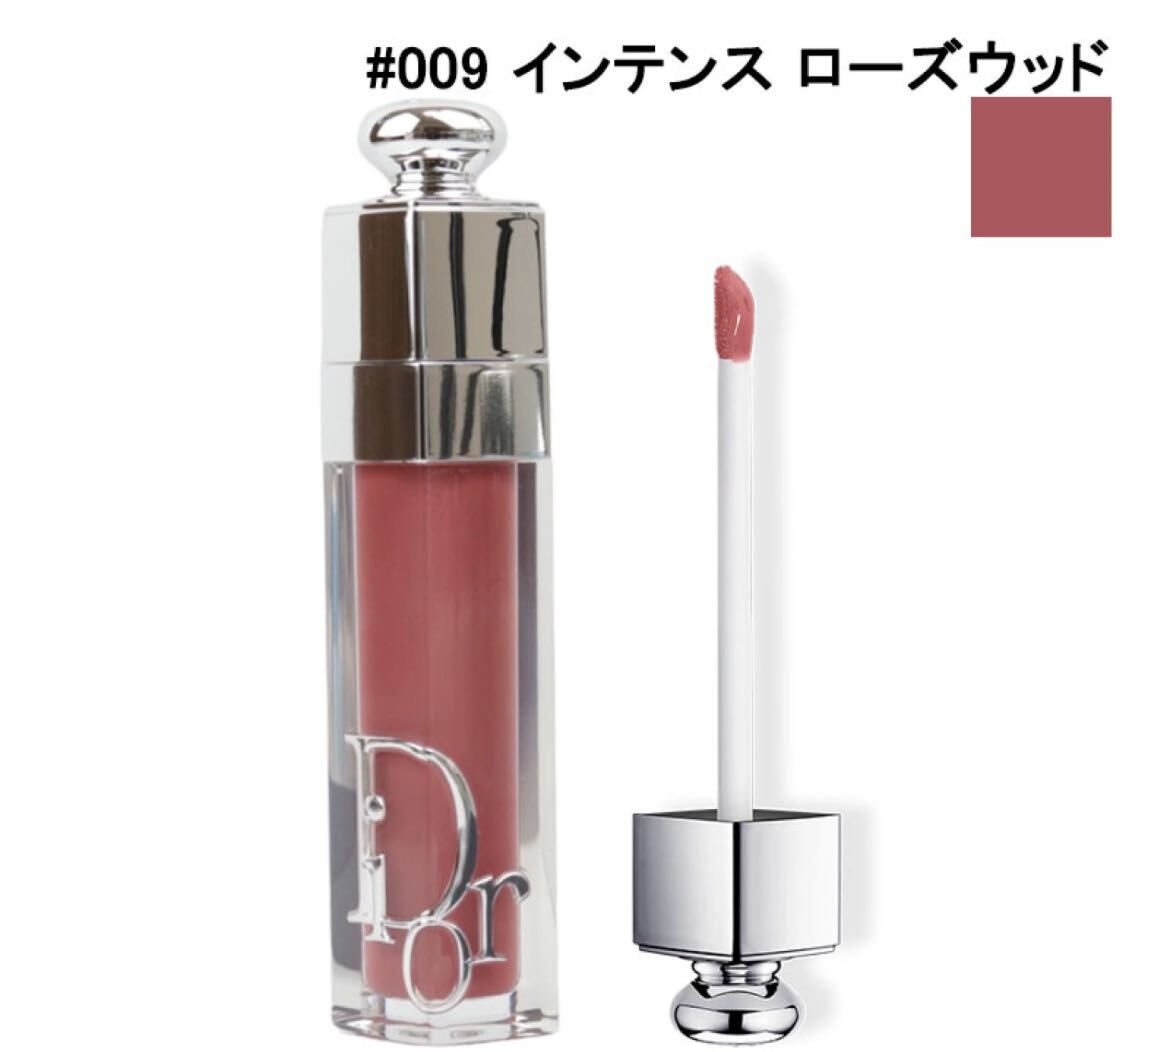 Dior Addict lip Maxima i The -009